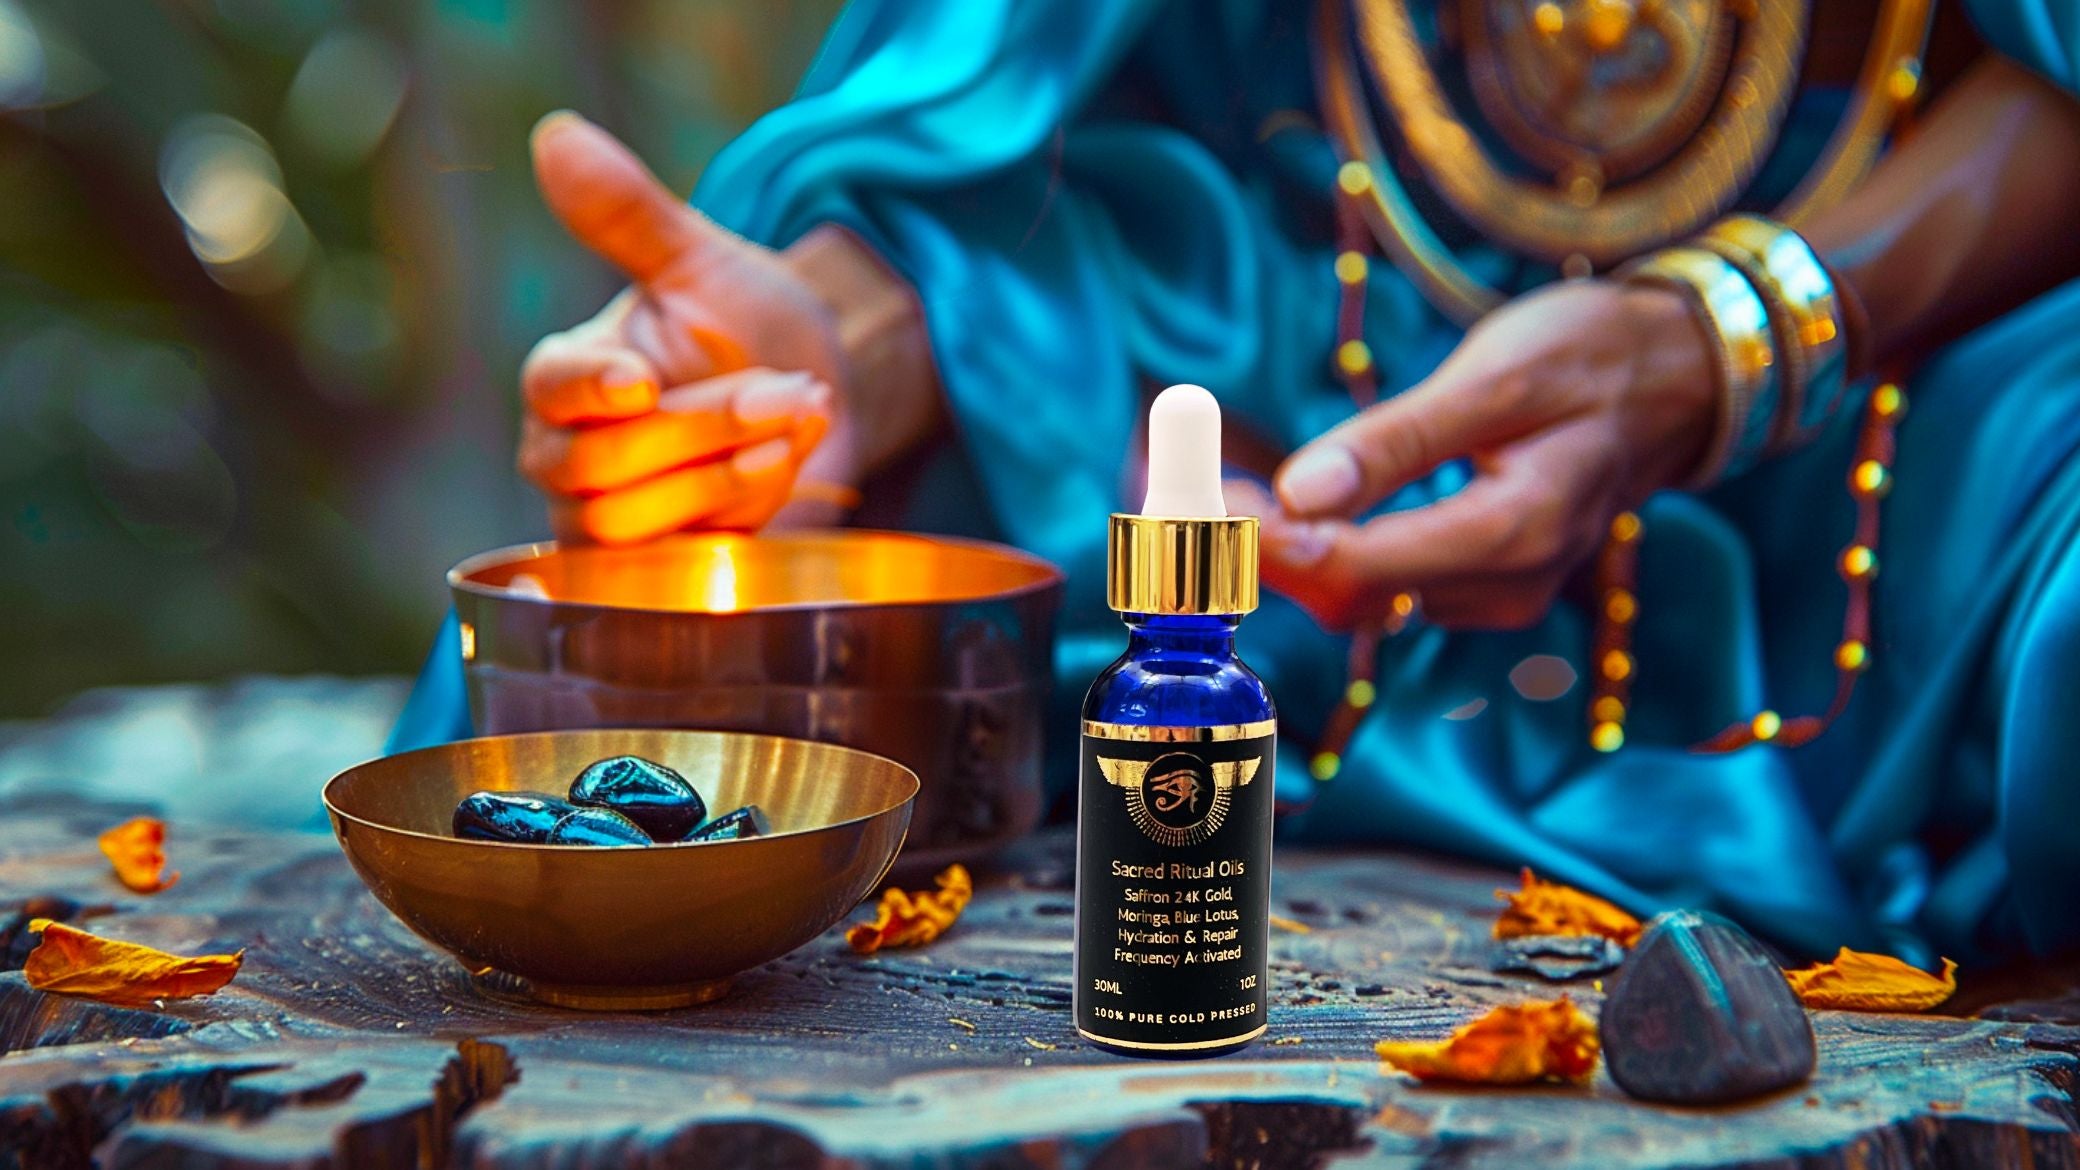 The Divine Elixir: Blue Lotus, Moringa, Saffron, and 24K Gold Flakes - Recipes of the Gods